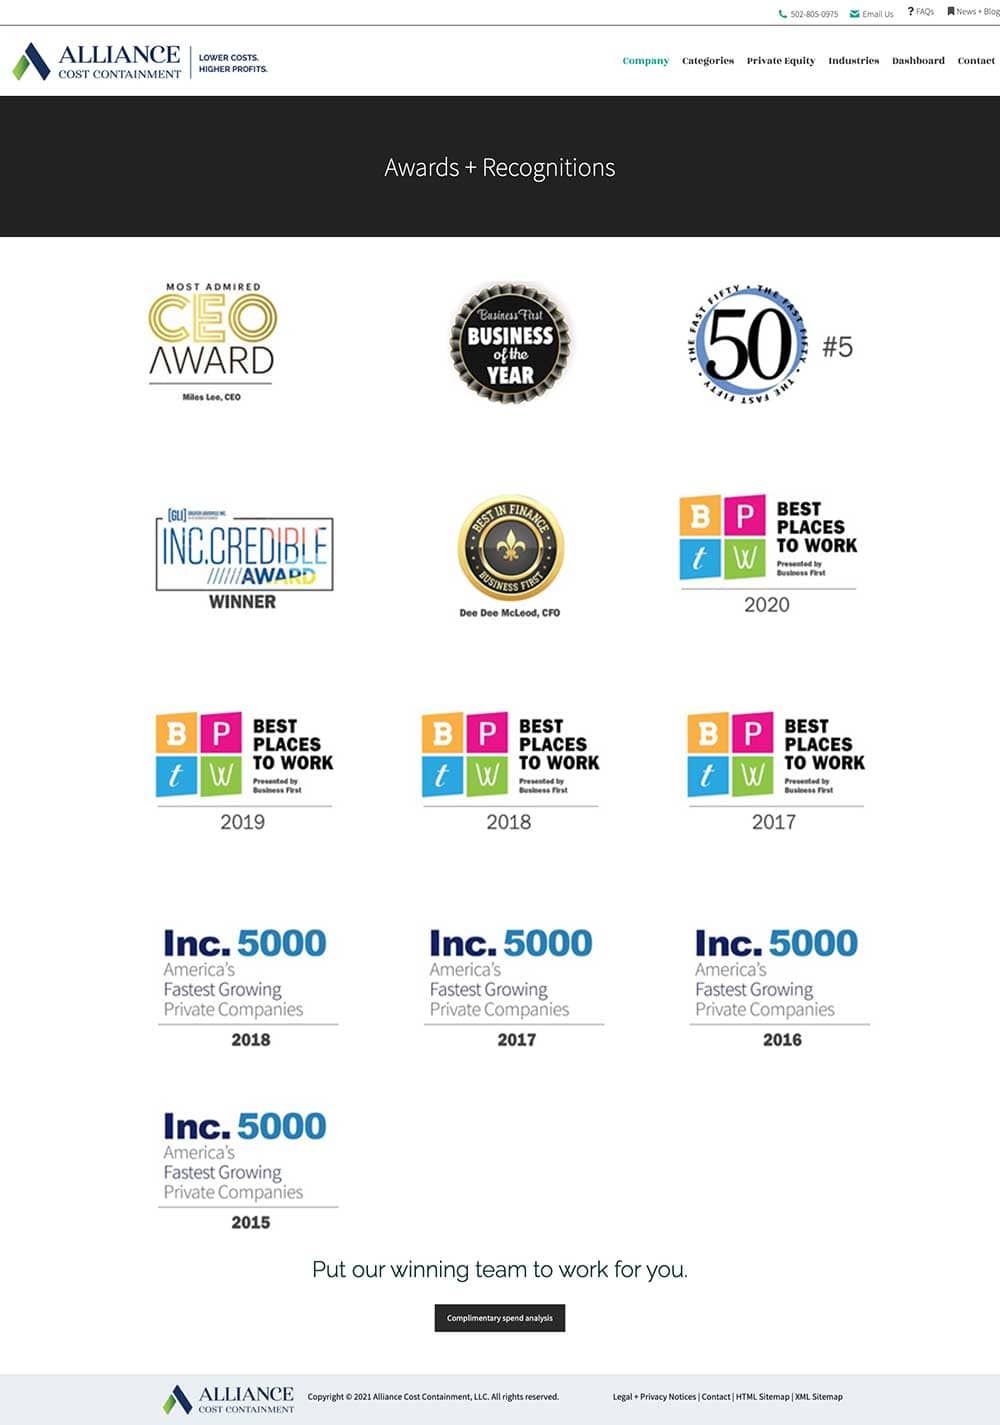 Screenshot of ACC awards page wordpress website design